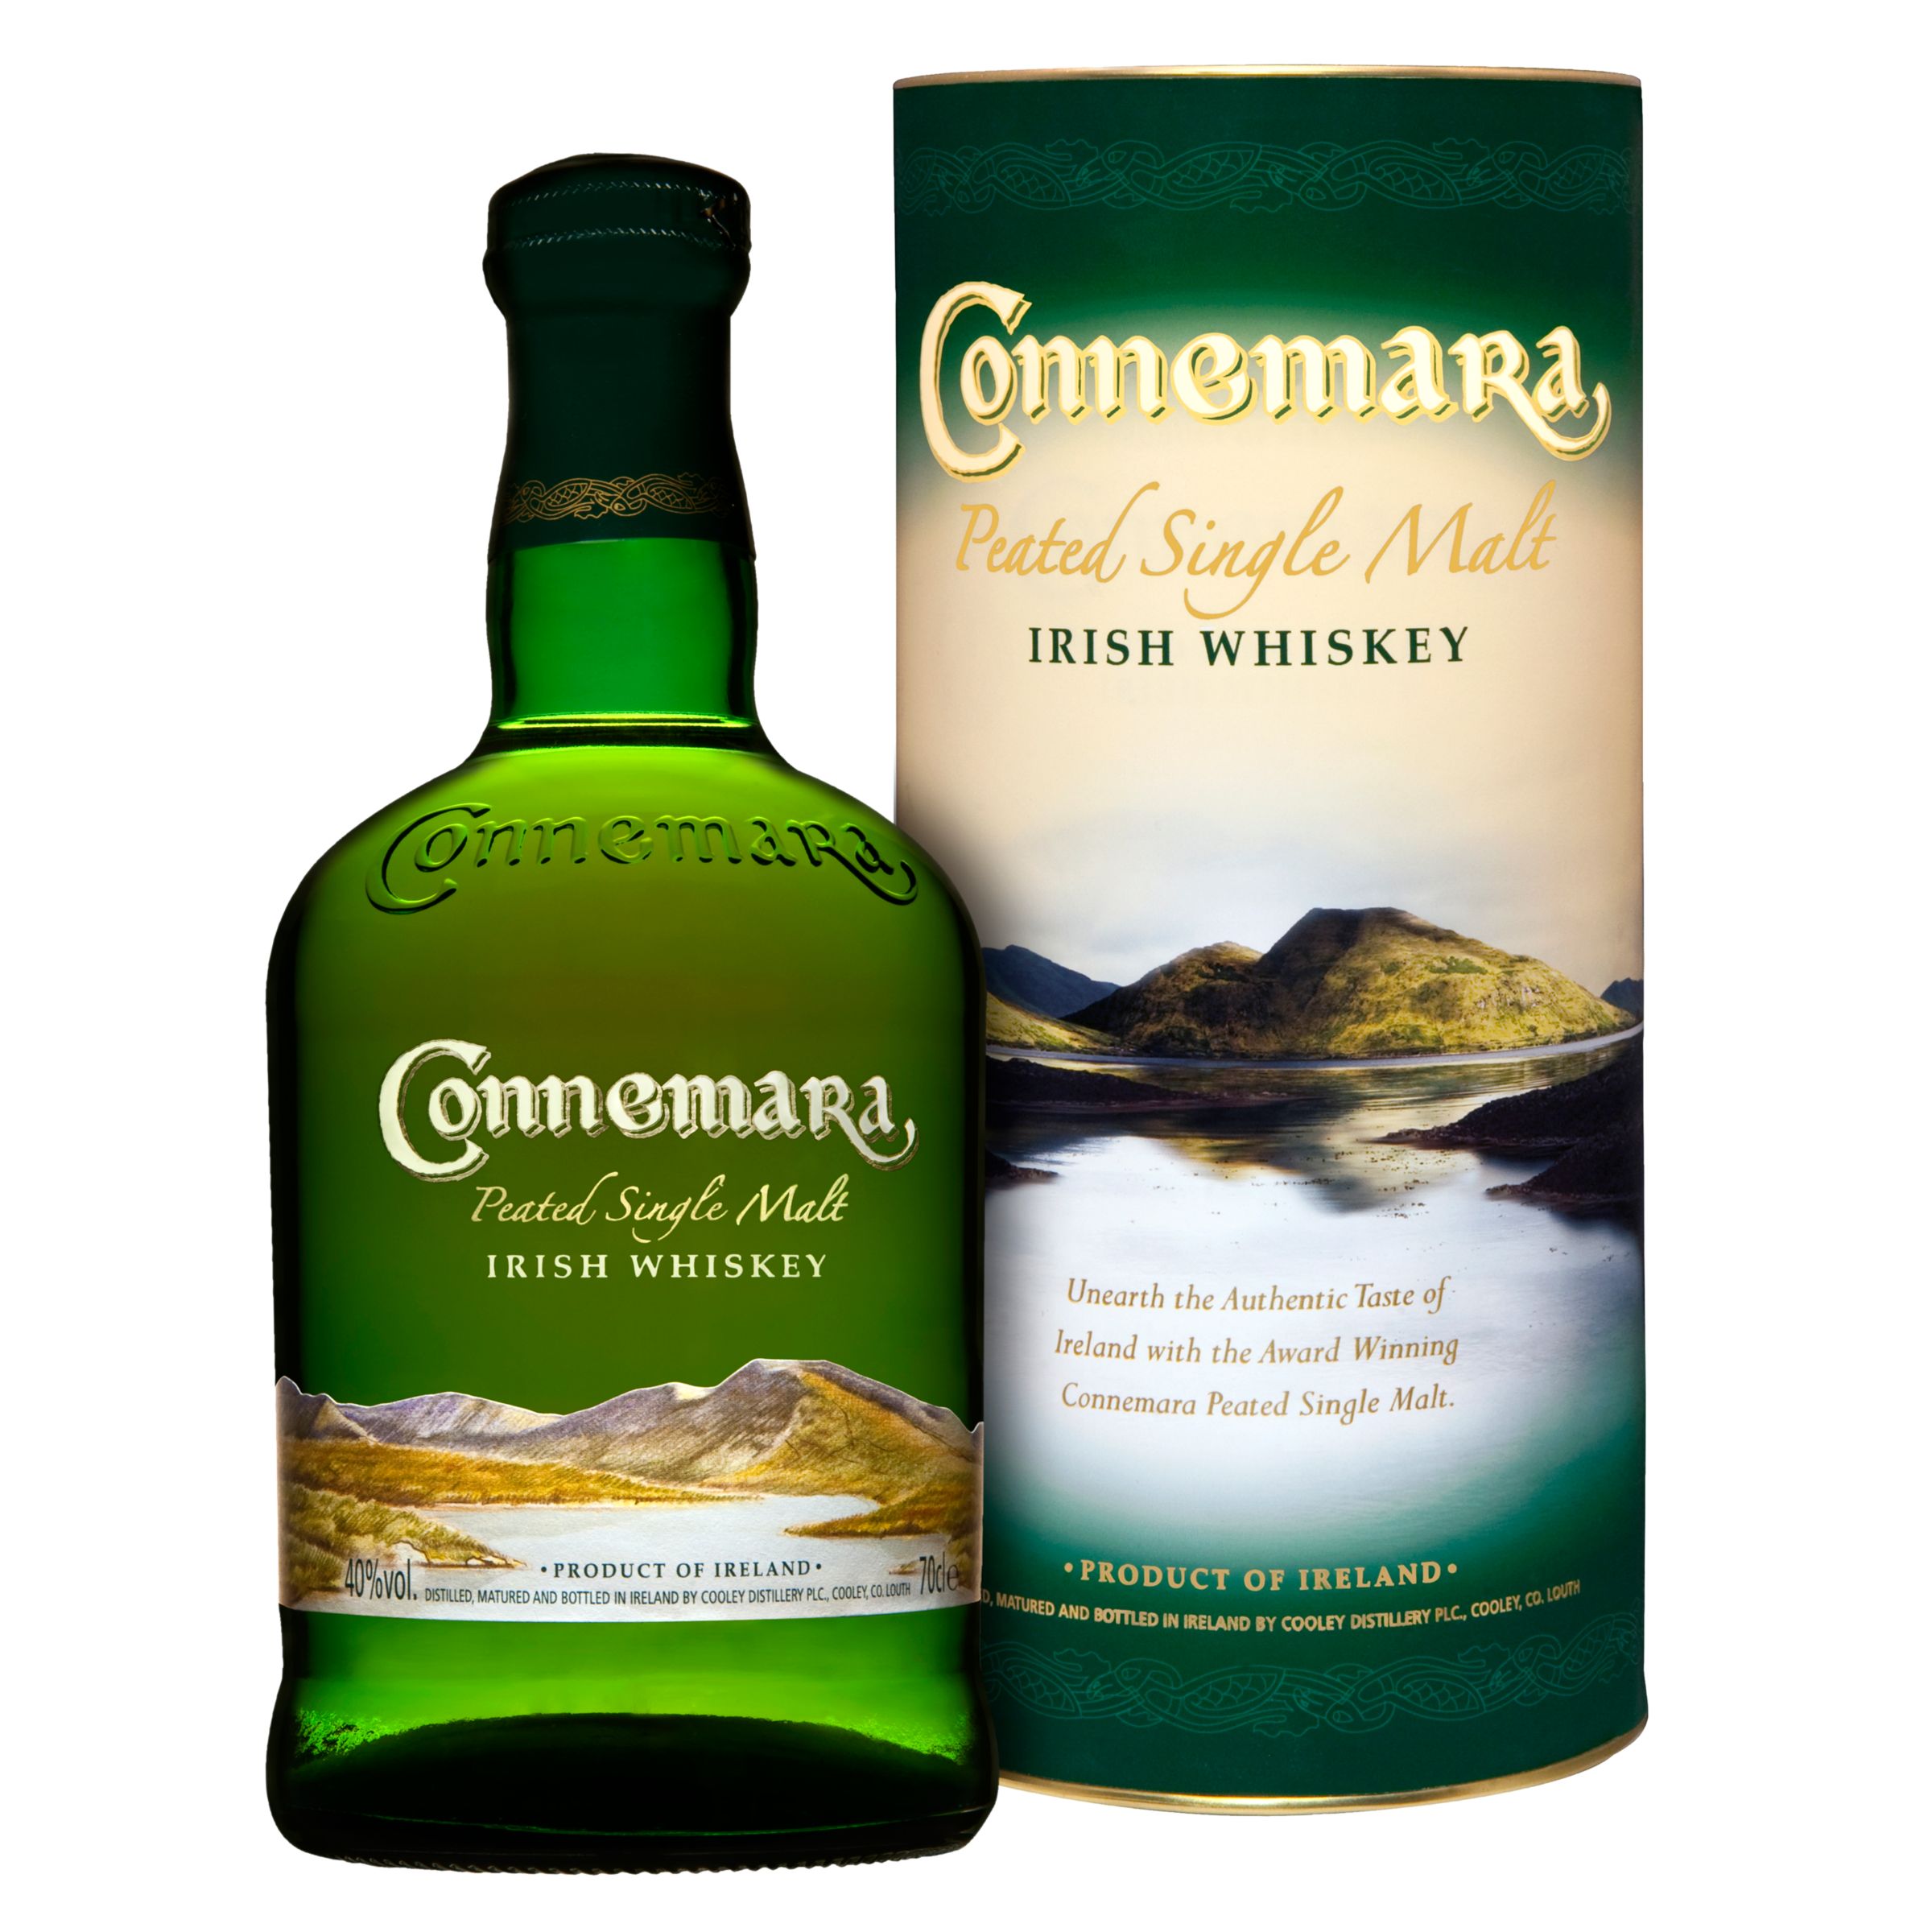 Connemara Single Malt Irish Whiskey at John Lewis